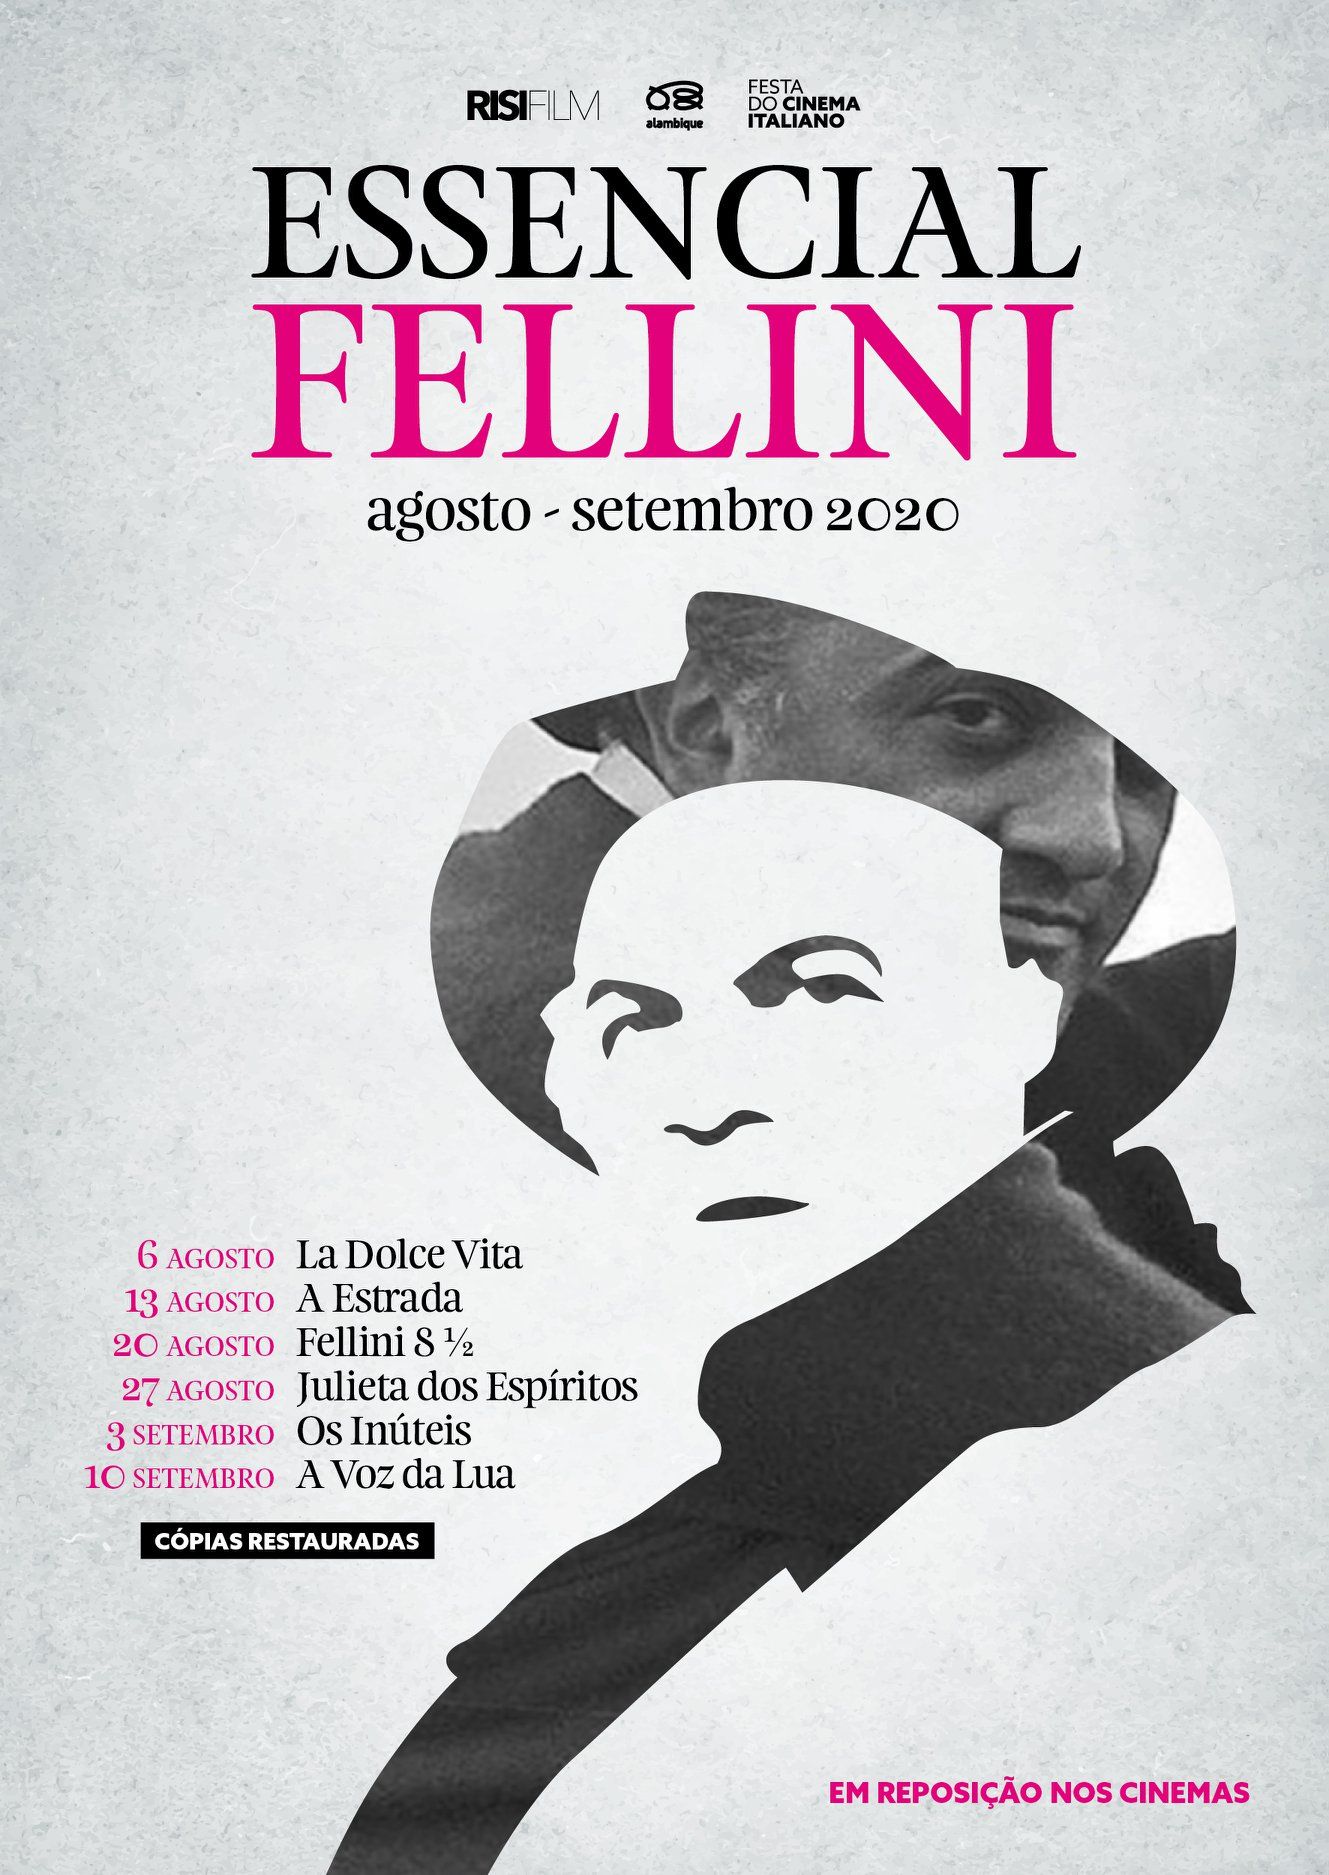 Fellini 100 cartaz 2020 1 40